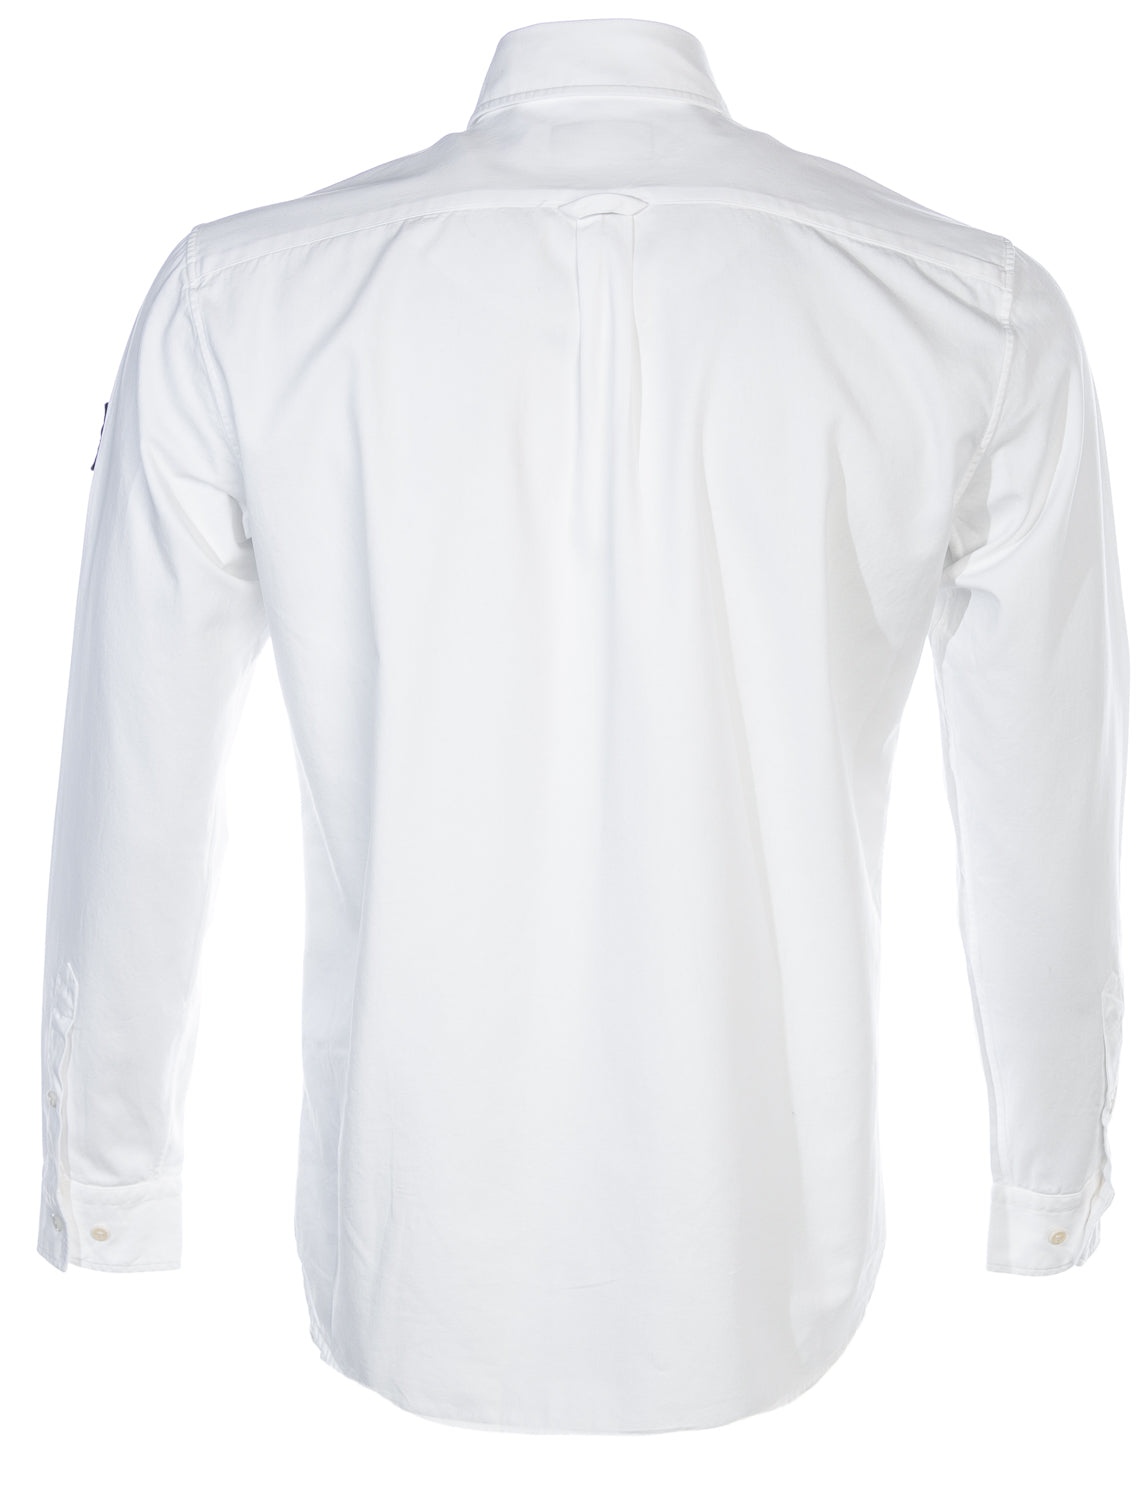 Belstaff Pitch Shirt in White